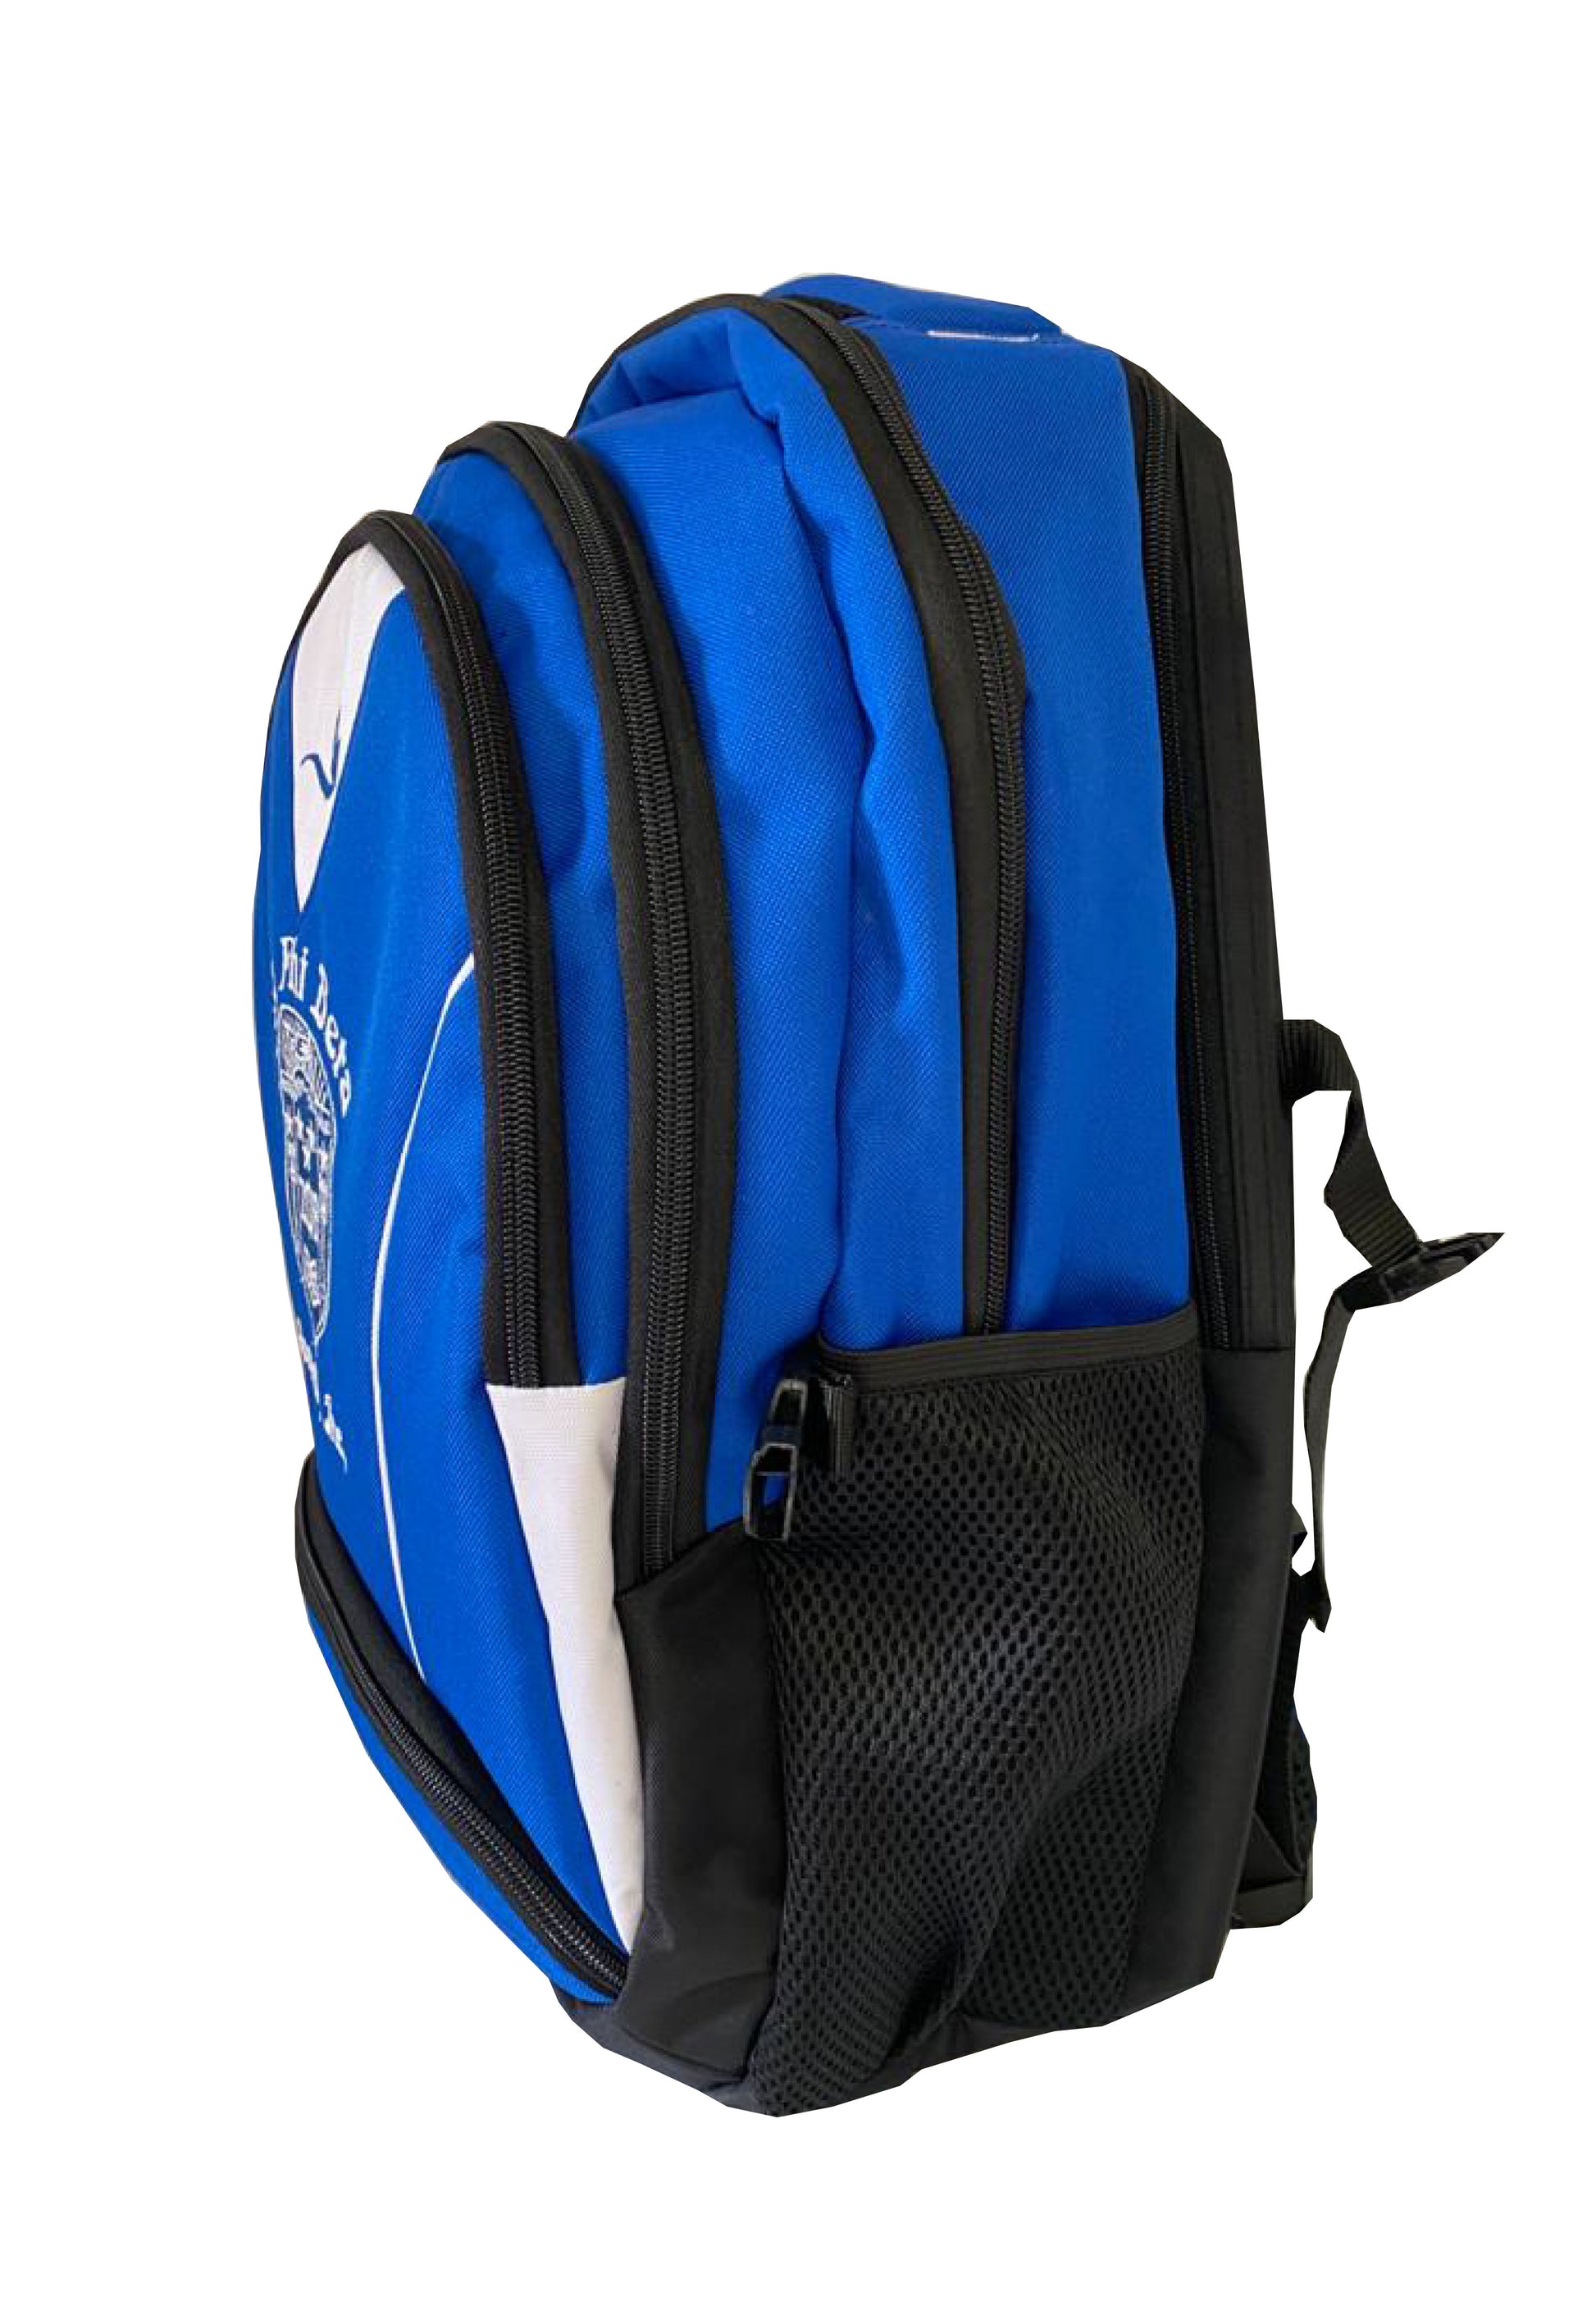 Zeta Phi Beta (ΖΦΒ) Blue & White Backpack with laptop sleeves